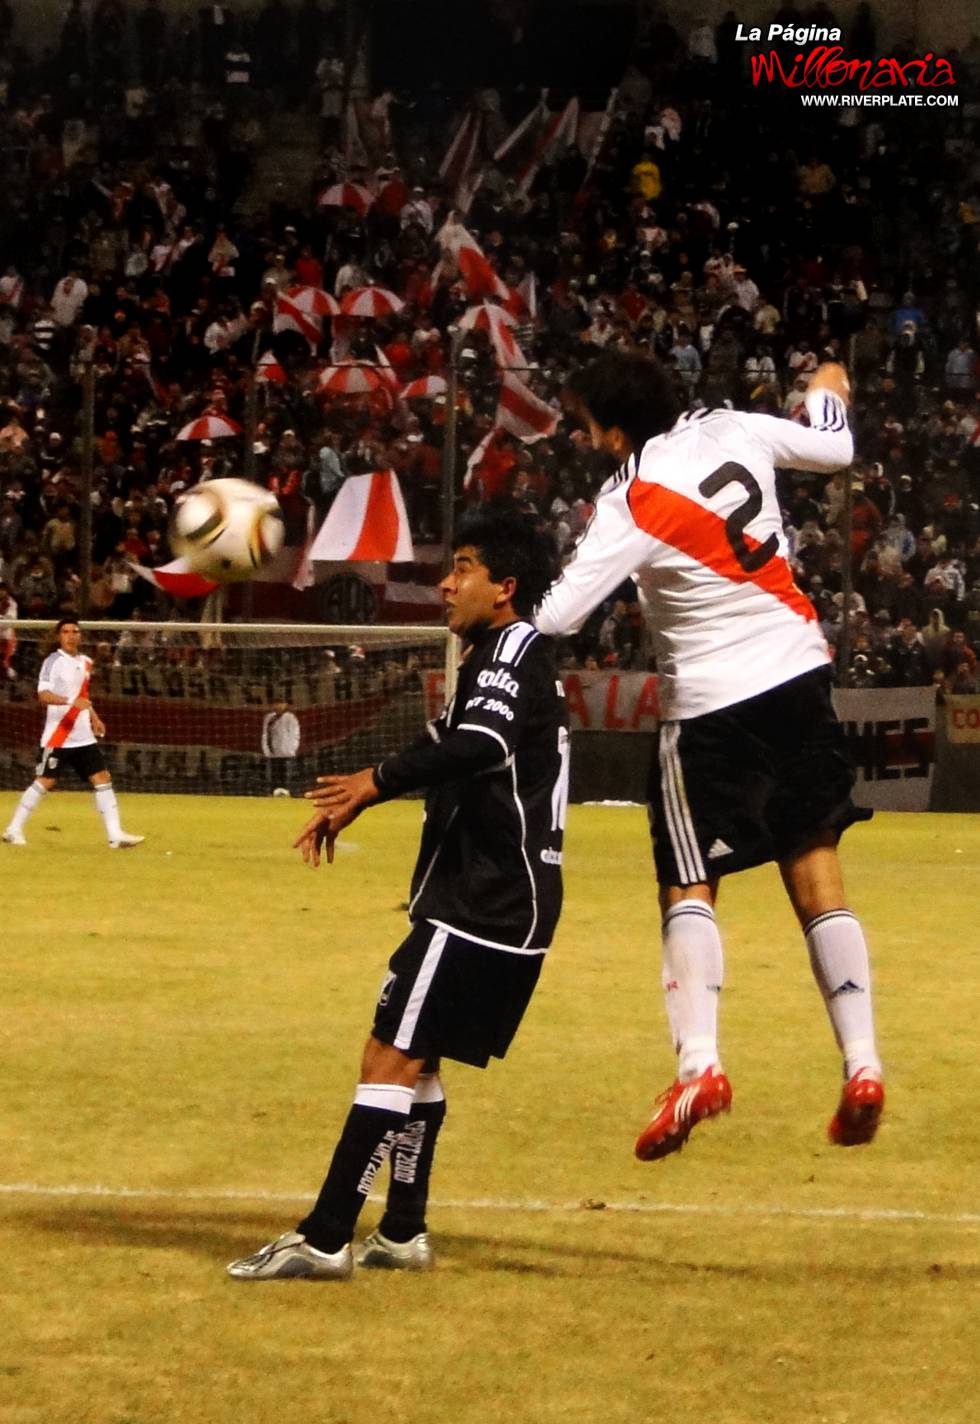 River Plate vs Central Norte (Salta 2010) 39